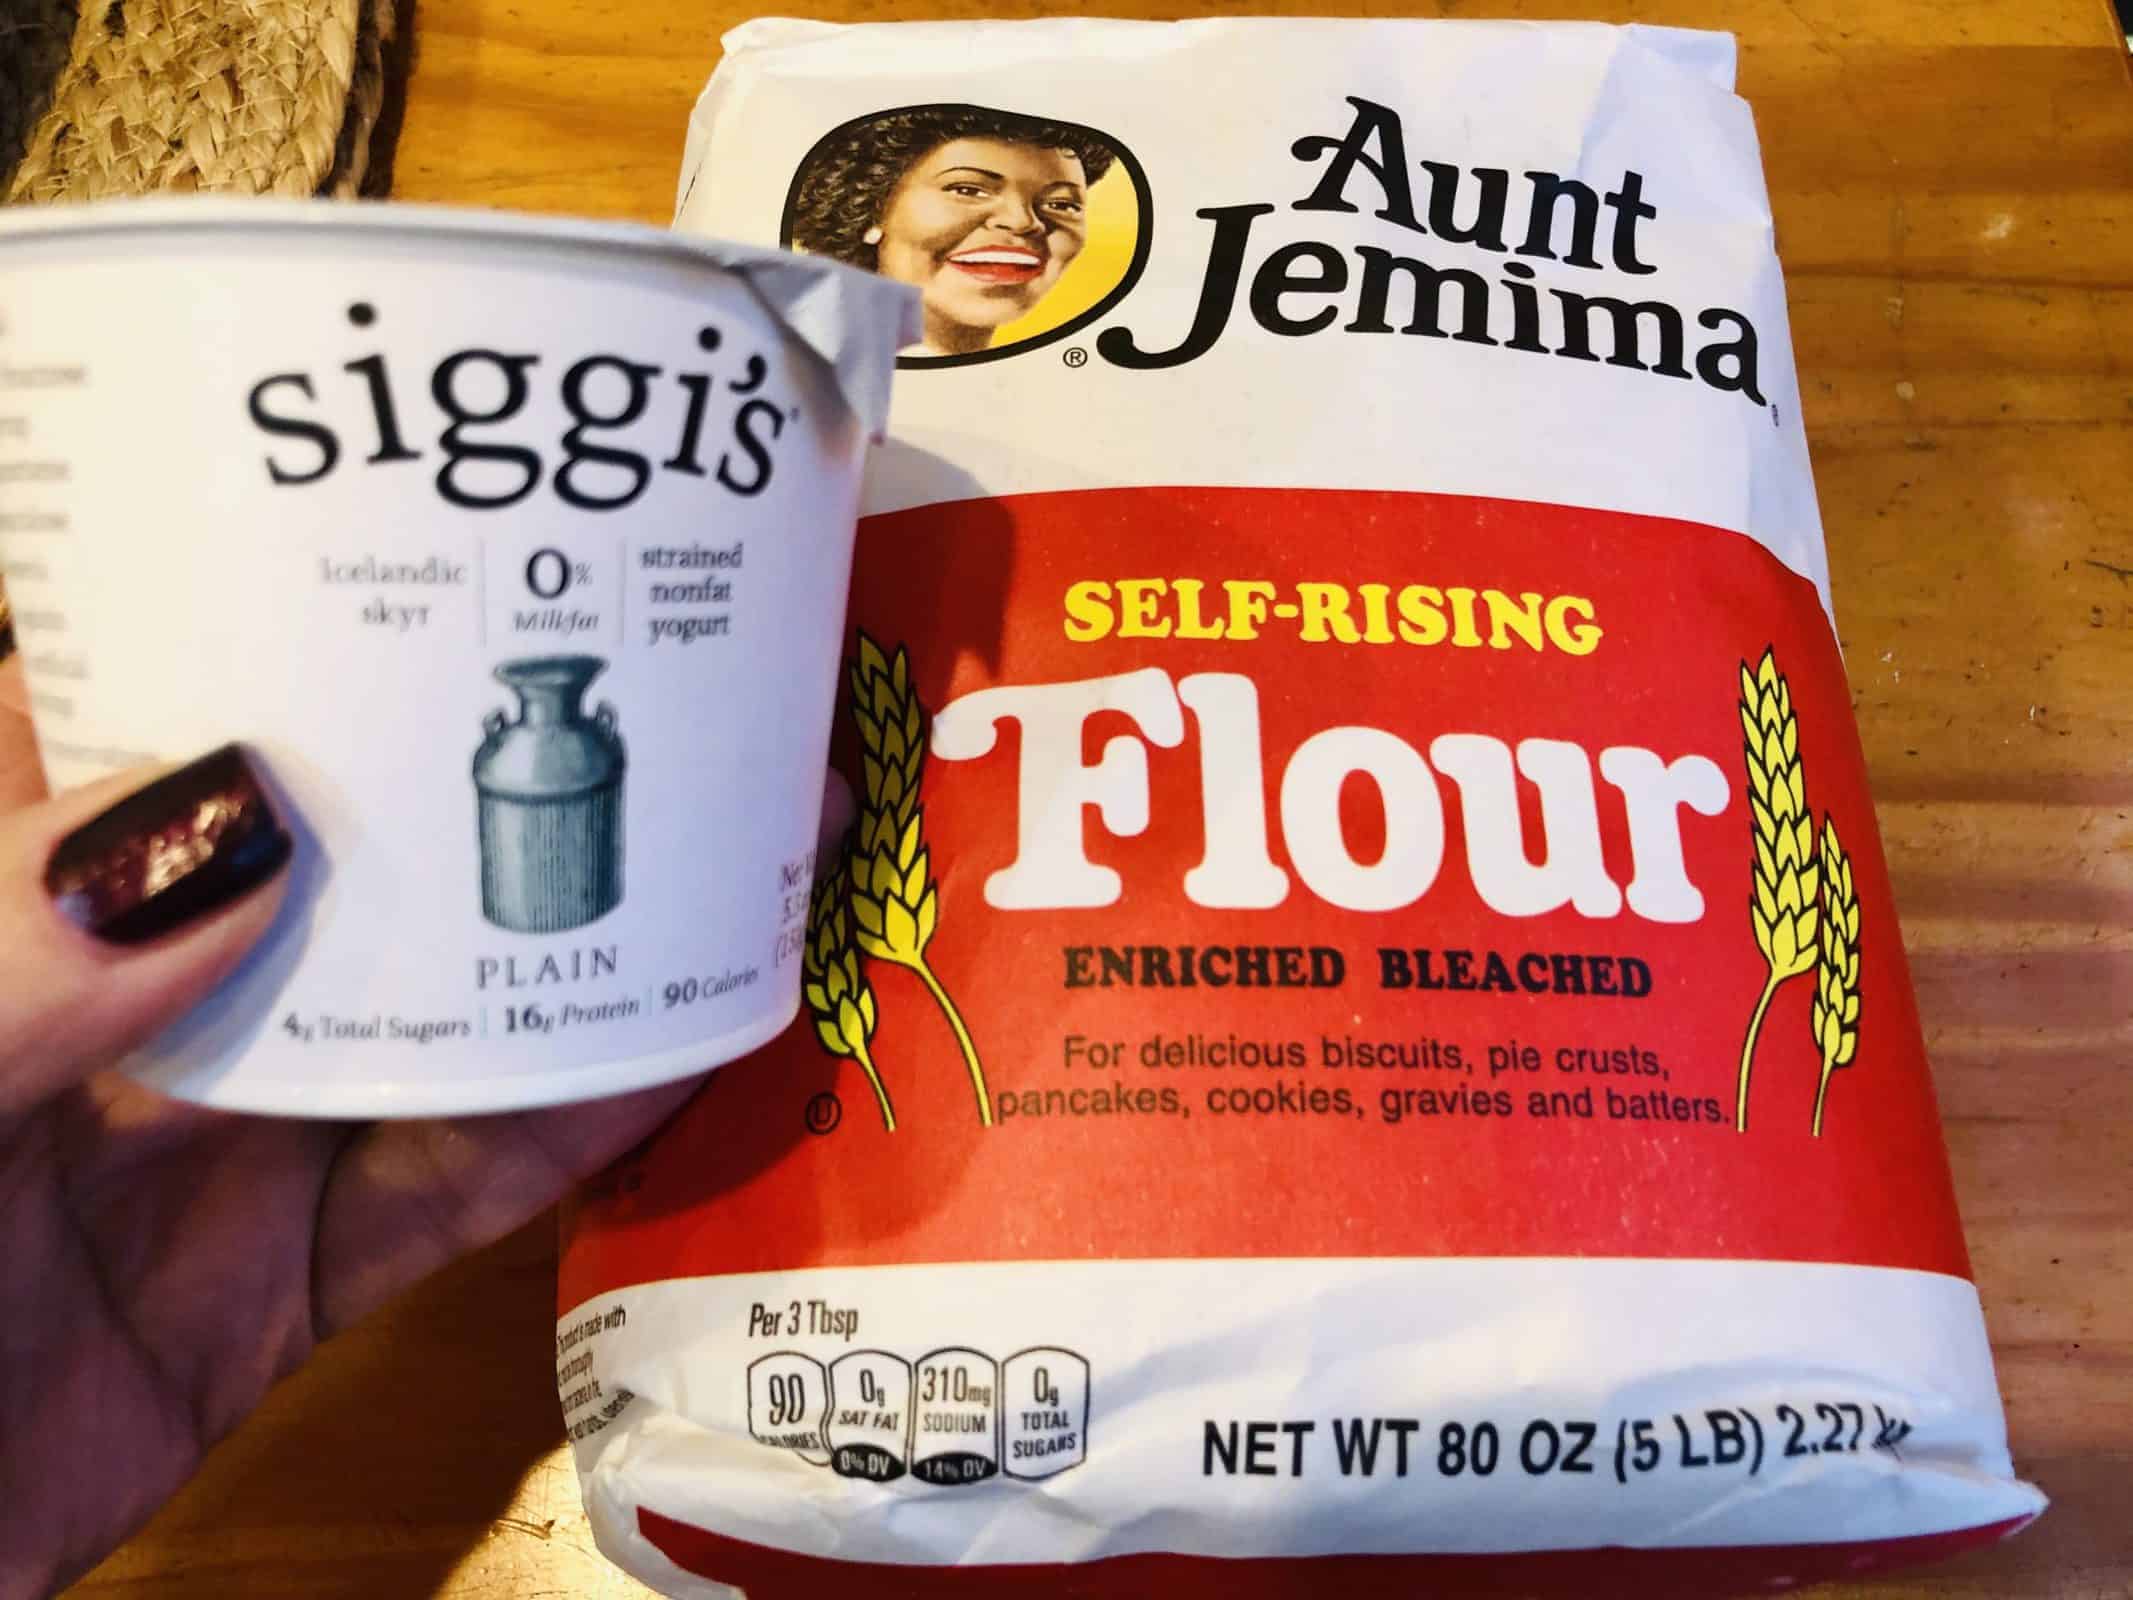 Greek Yogurt and Self Rising Flour